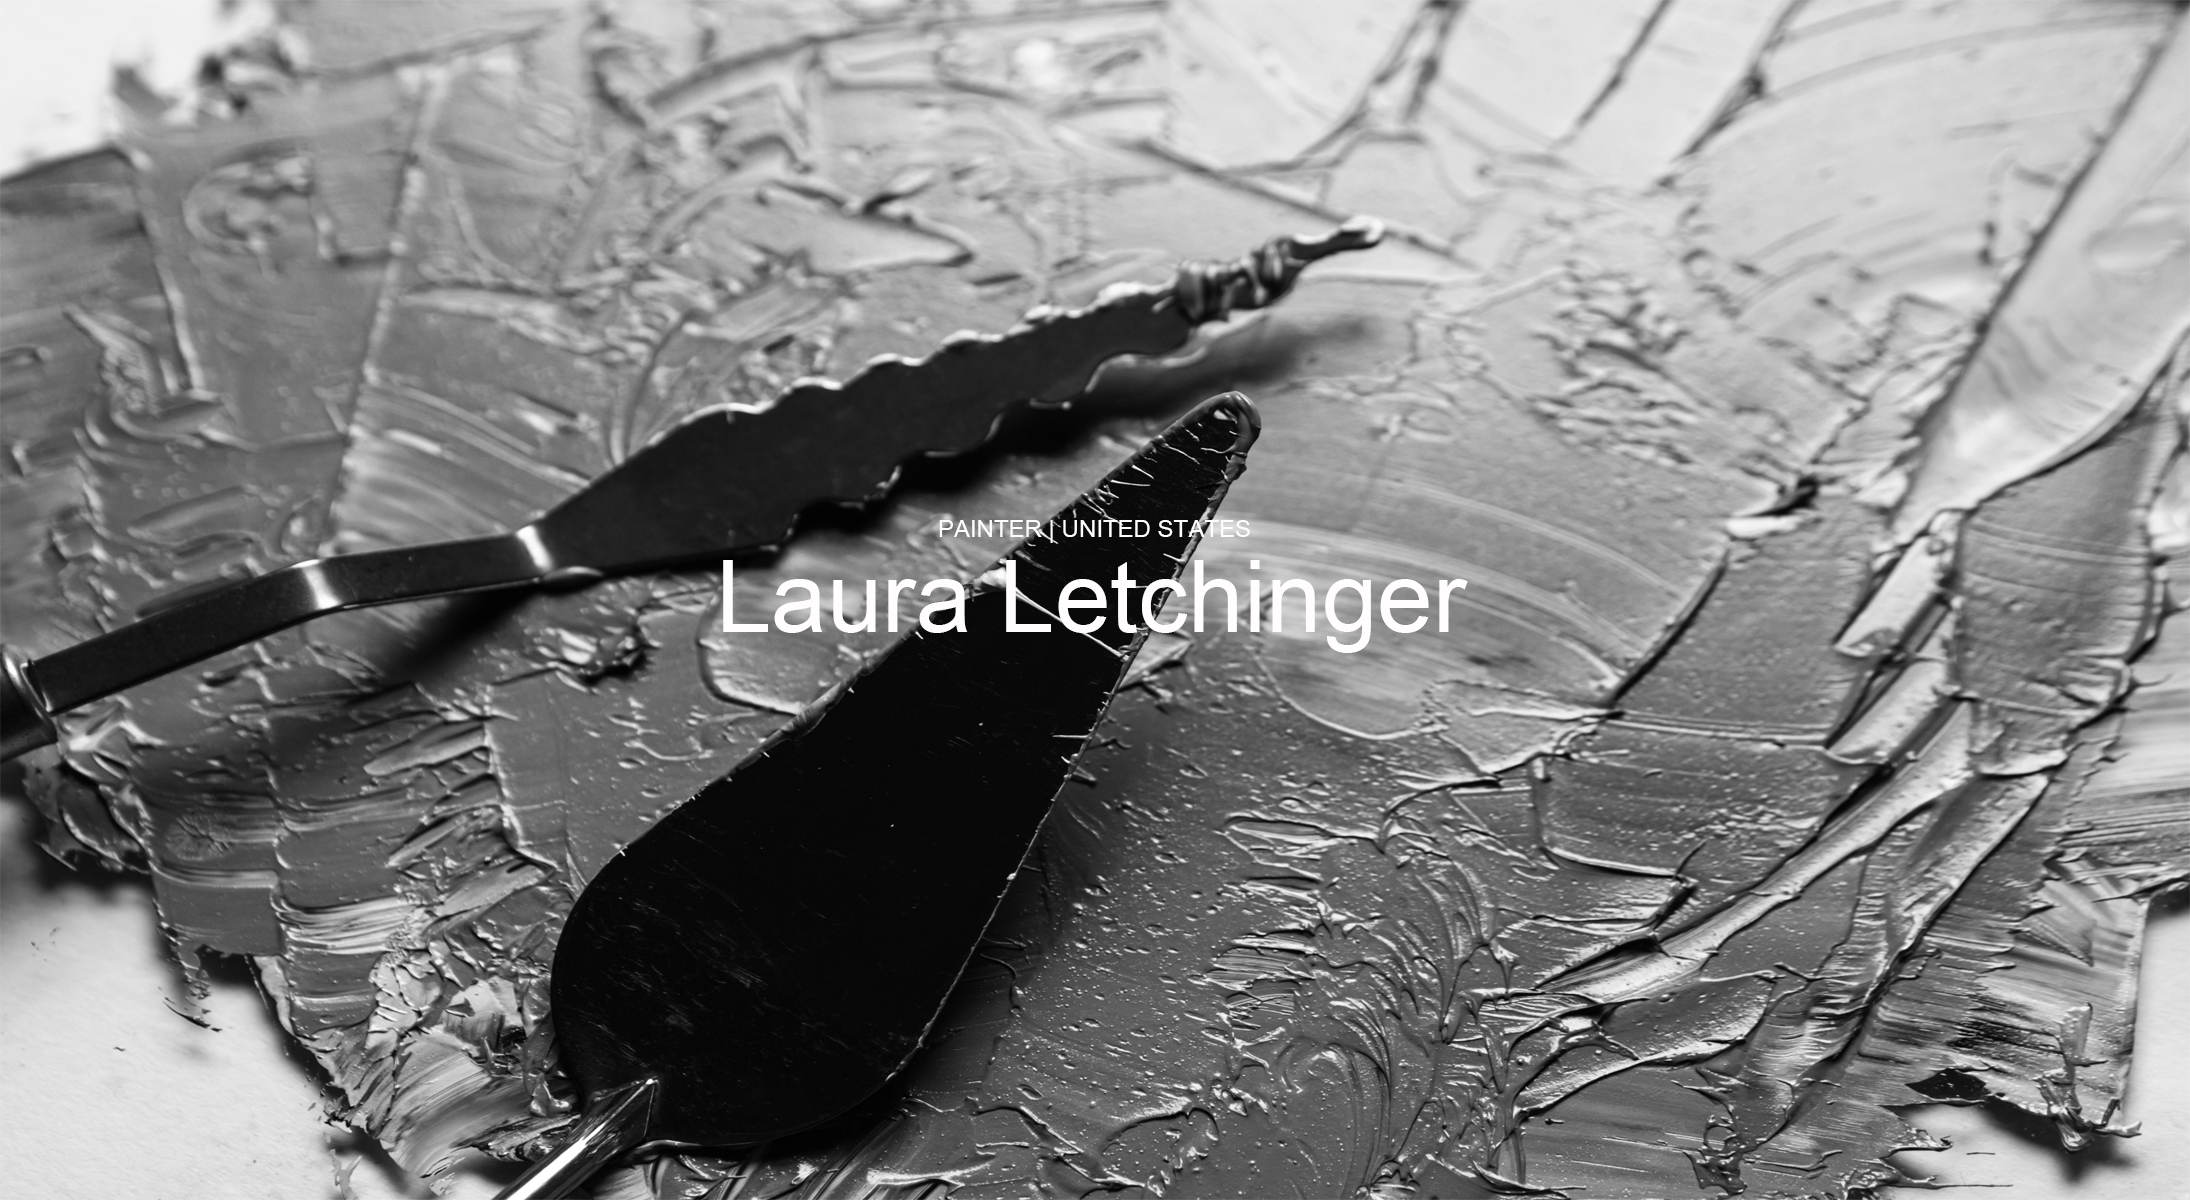 Laura Letchinger